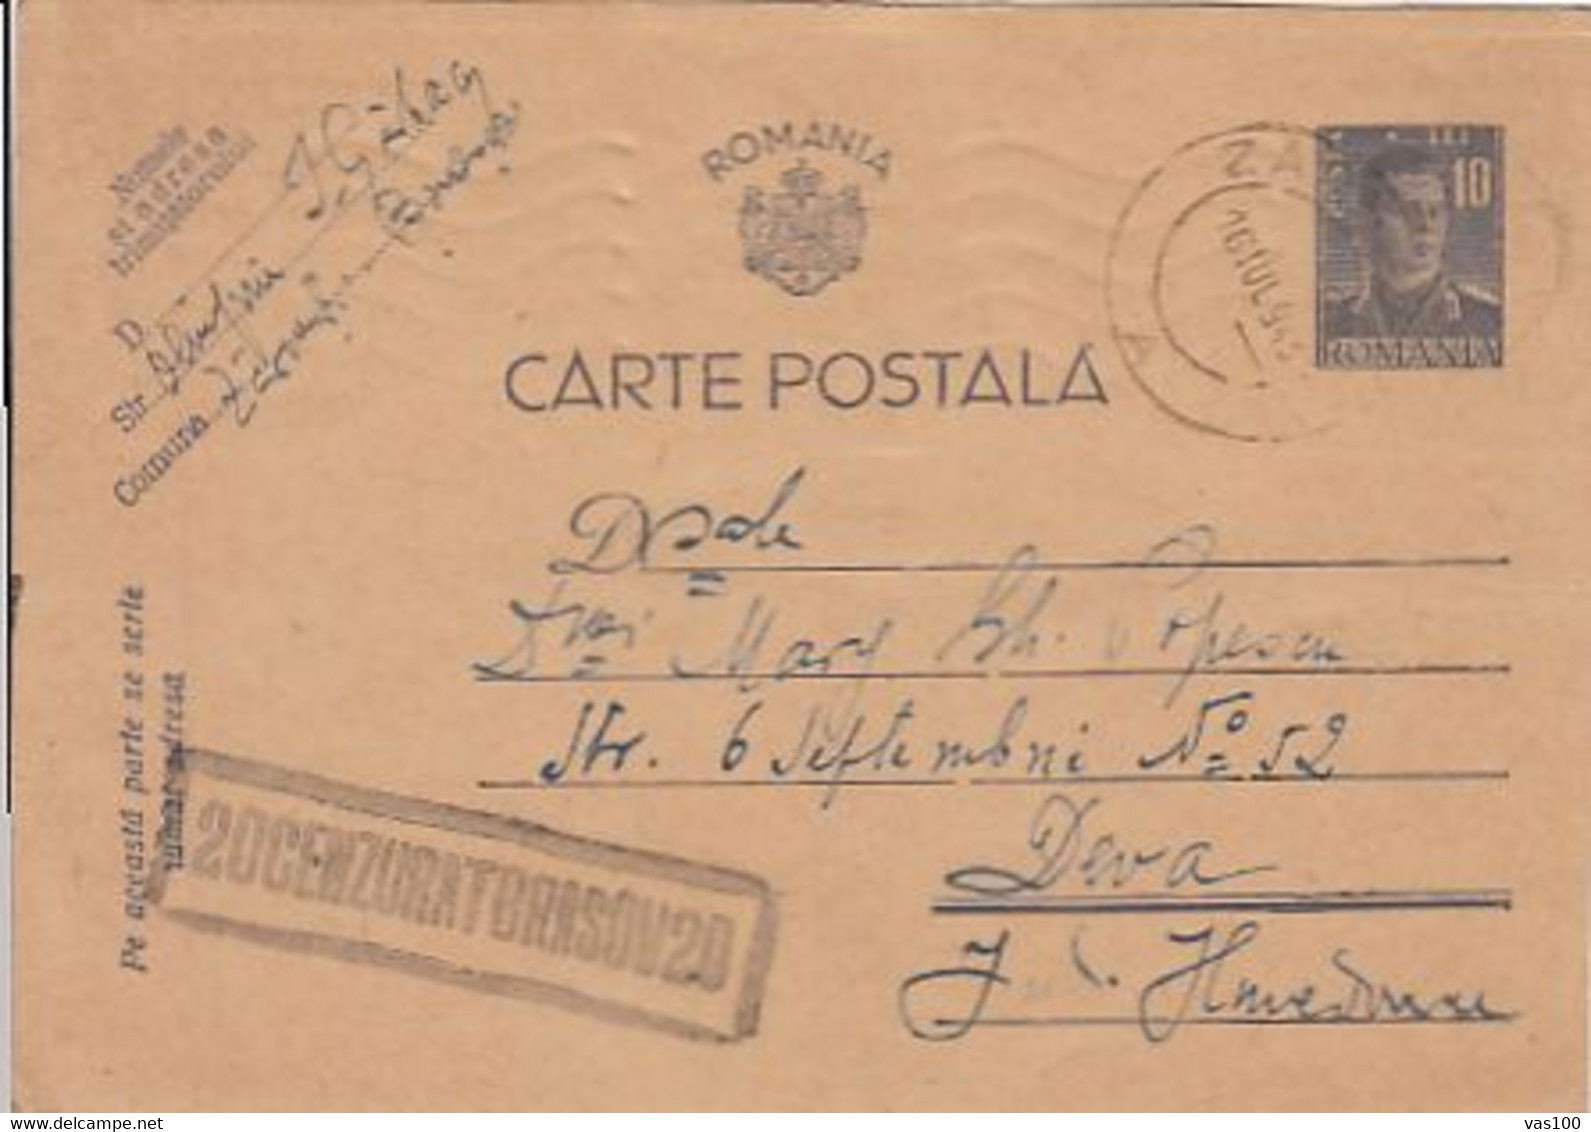 WW2 LETTERS, CENSORED BRASOV NR 20, KING MICHAEL PC STATIONERY, ENTIER POSTAL, 1943, ROMANIA - Cartas De La Segunda Guerra Mundial